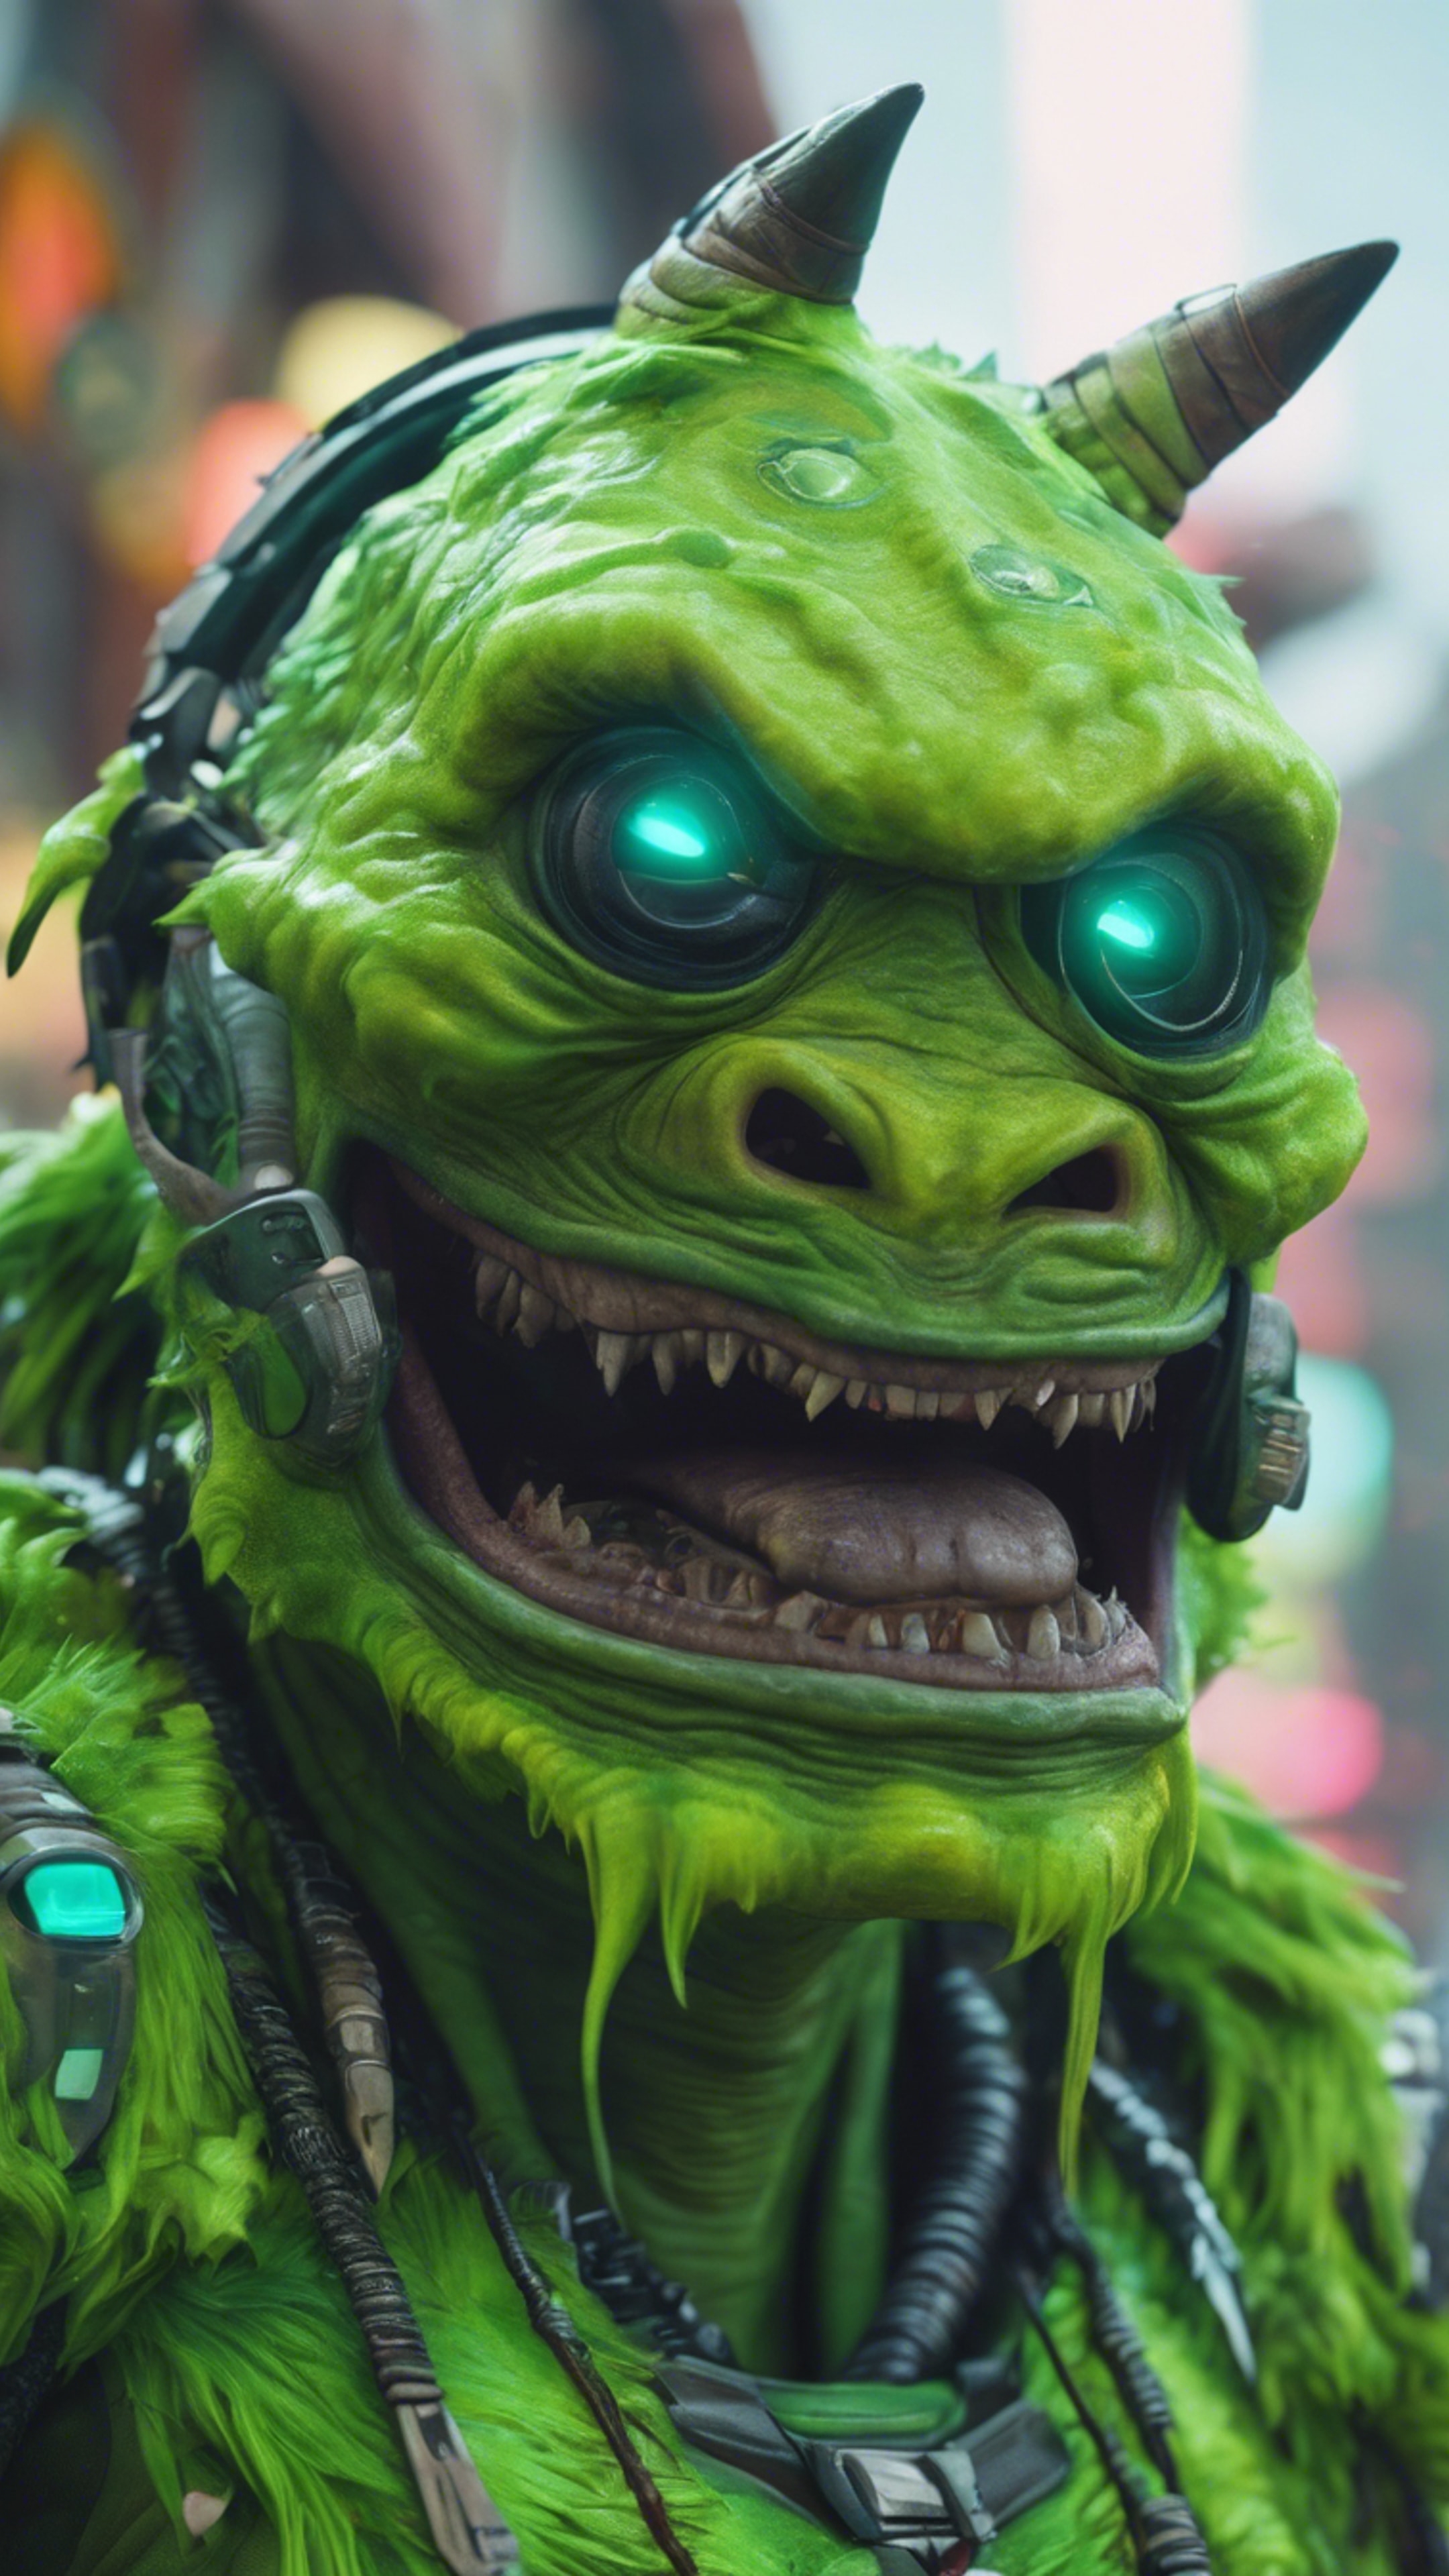 A neon green monster avatar in a popular video game Sfondo[af5fbbdb1ec04a35bd90]